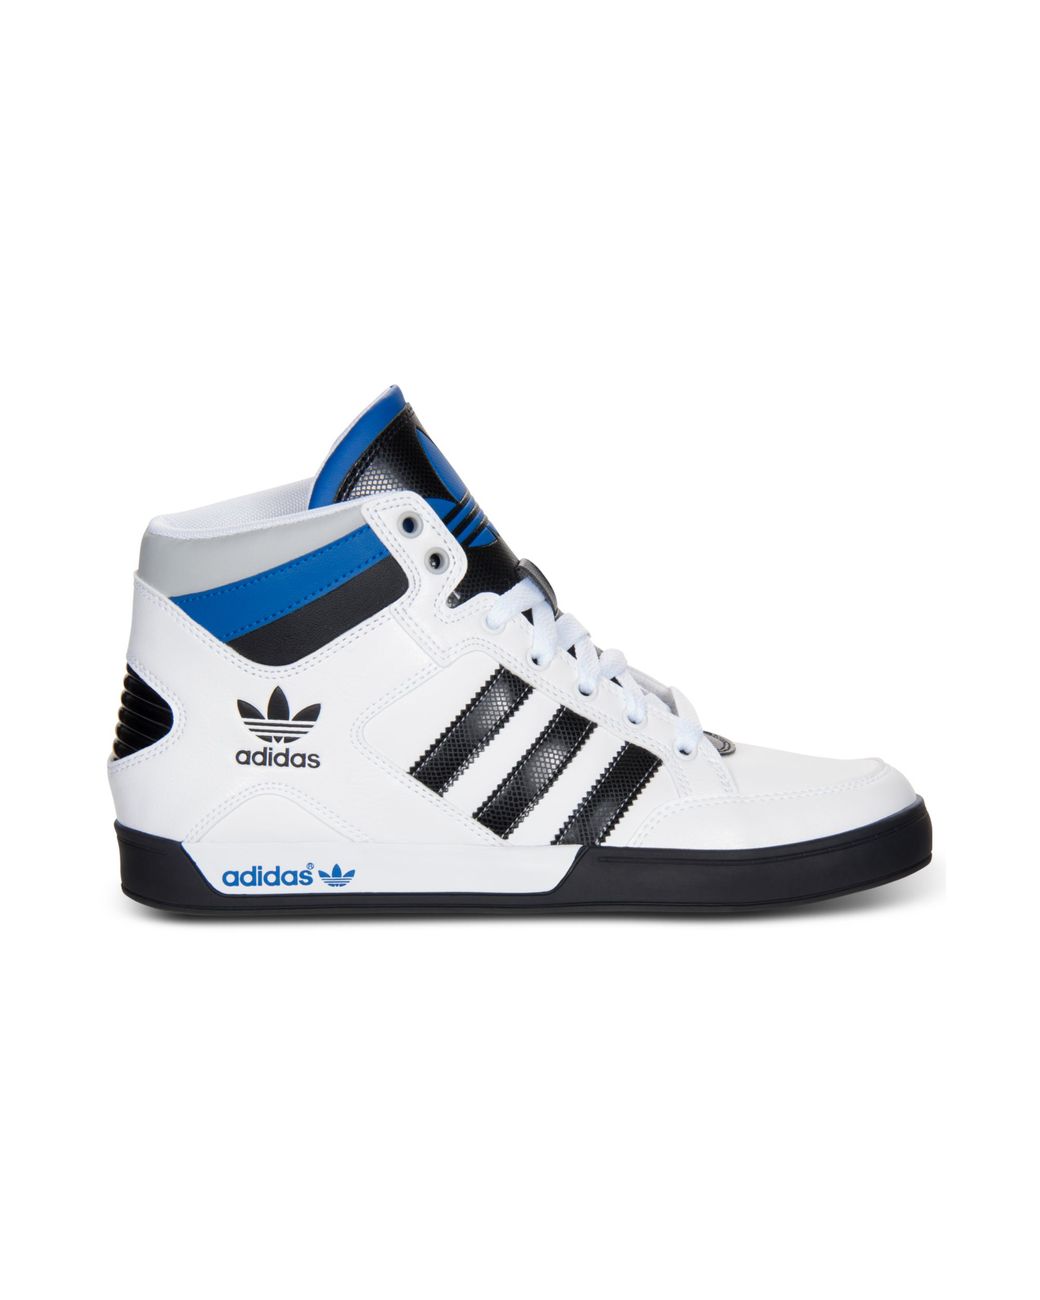 adidas Originals Hard Court Hi Casual Sneakers in White/Black/Blue (Black)  for Men | Lyst